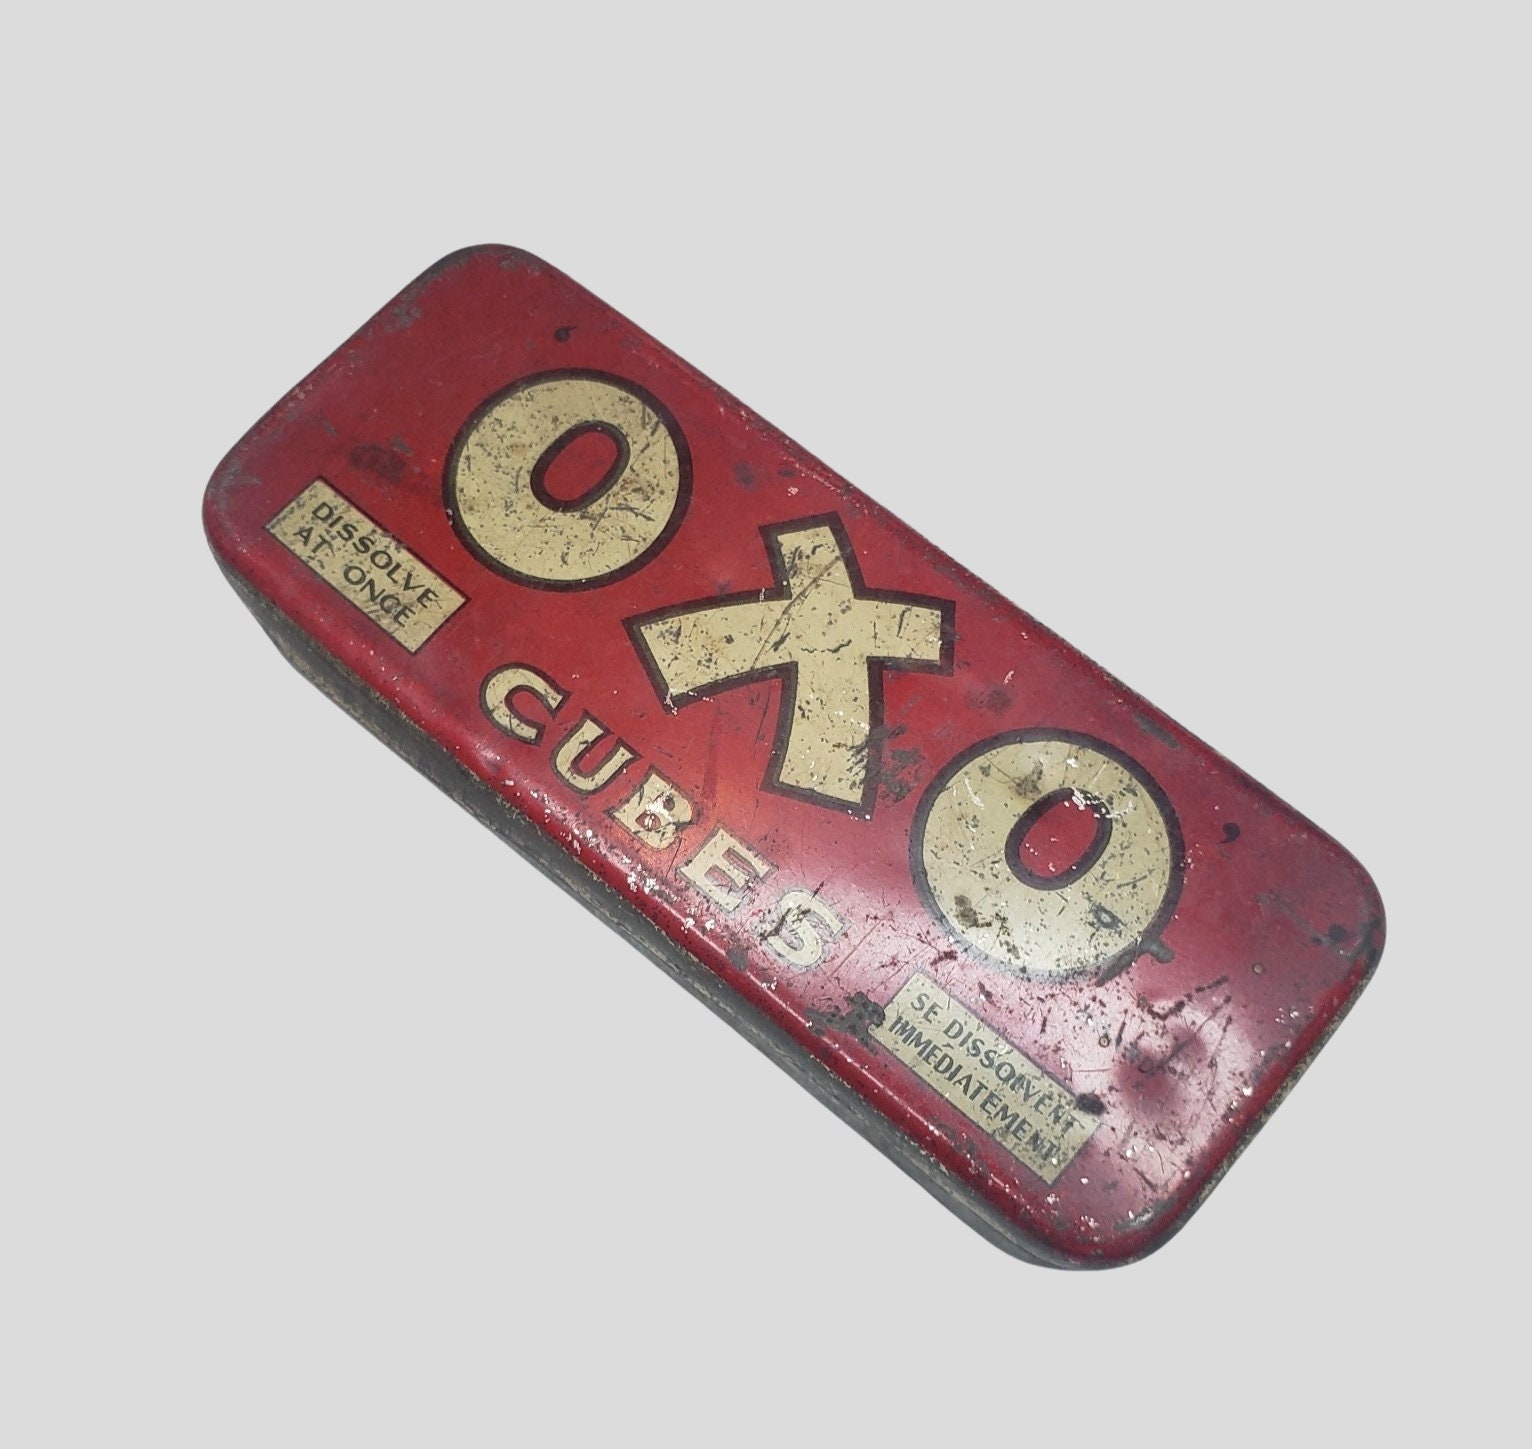 Oxo cubes tin; Oxo Ltd; 1930-1970; 10385/11